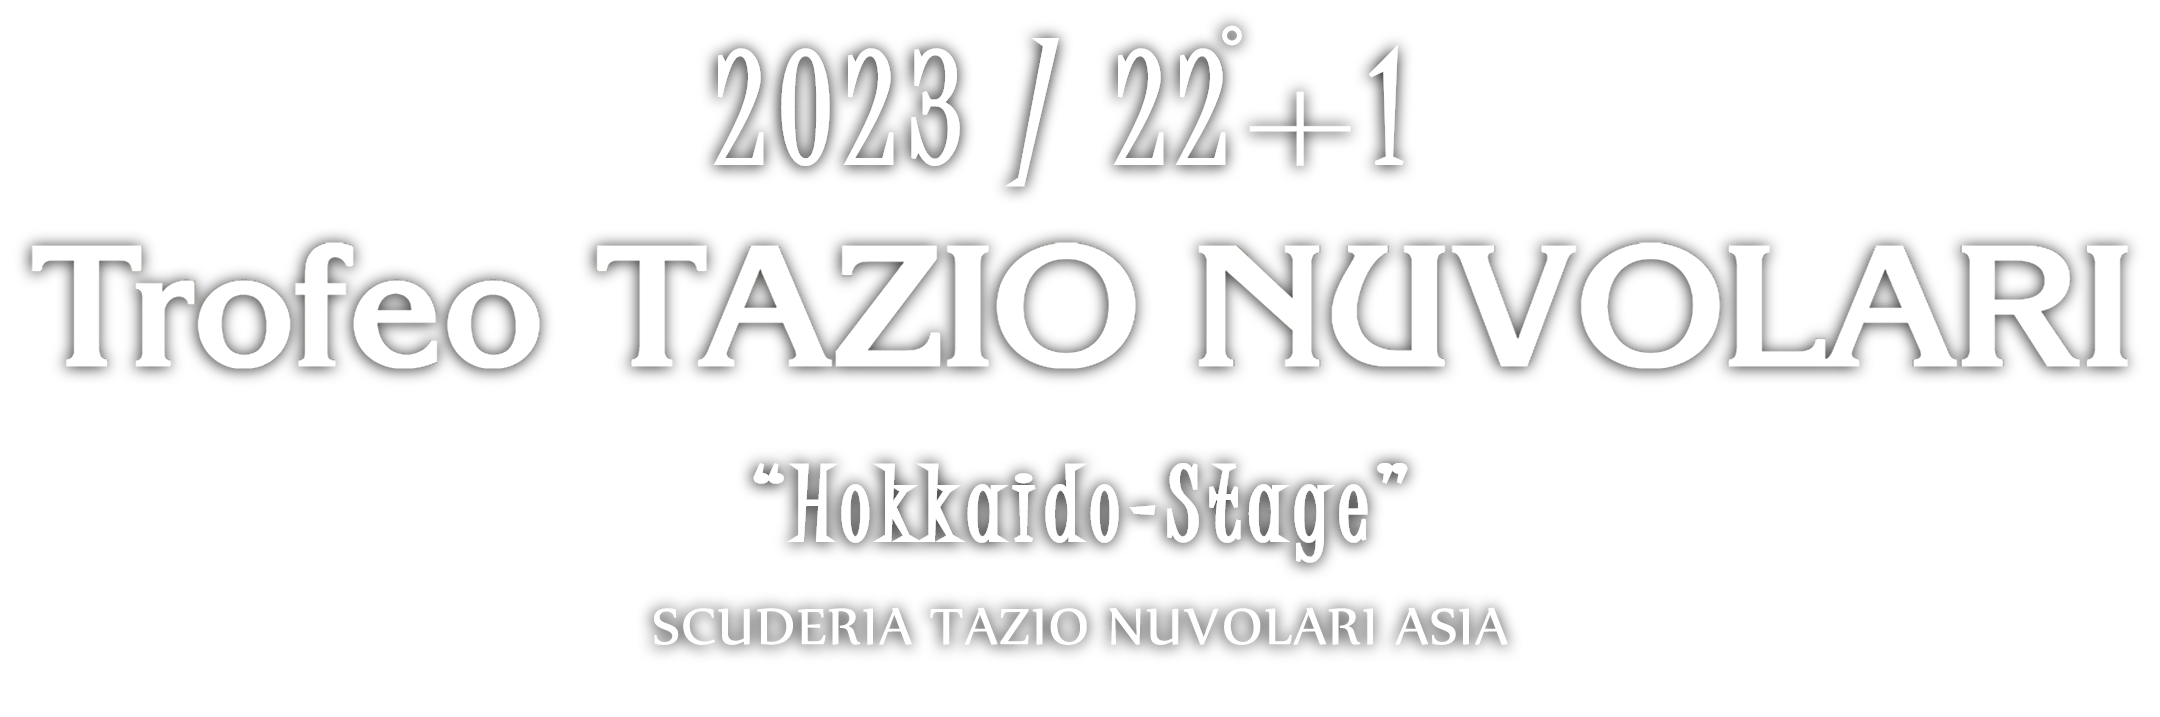 22th .+1 Trofeo TAZIO NUVOLARI Hokkaido-Stage